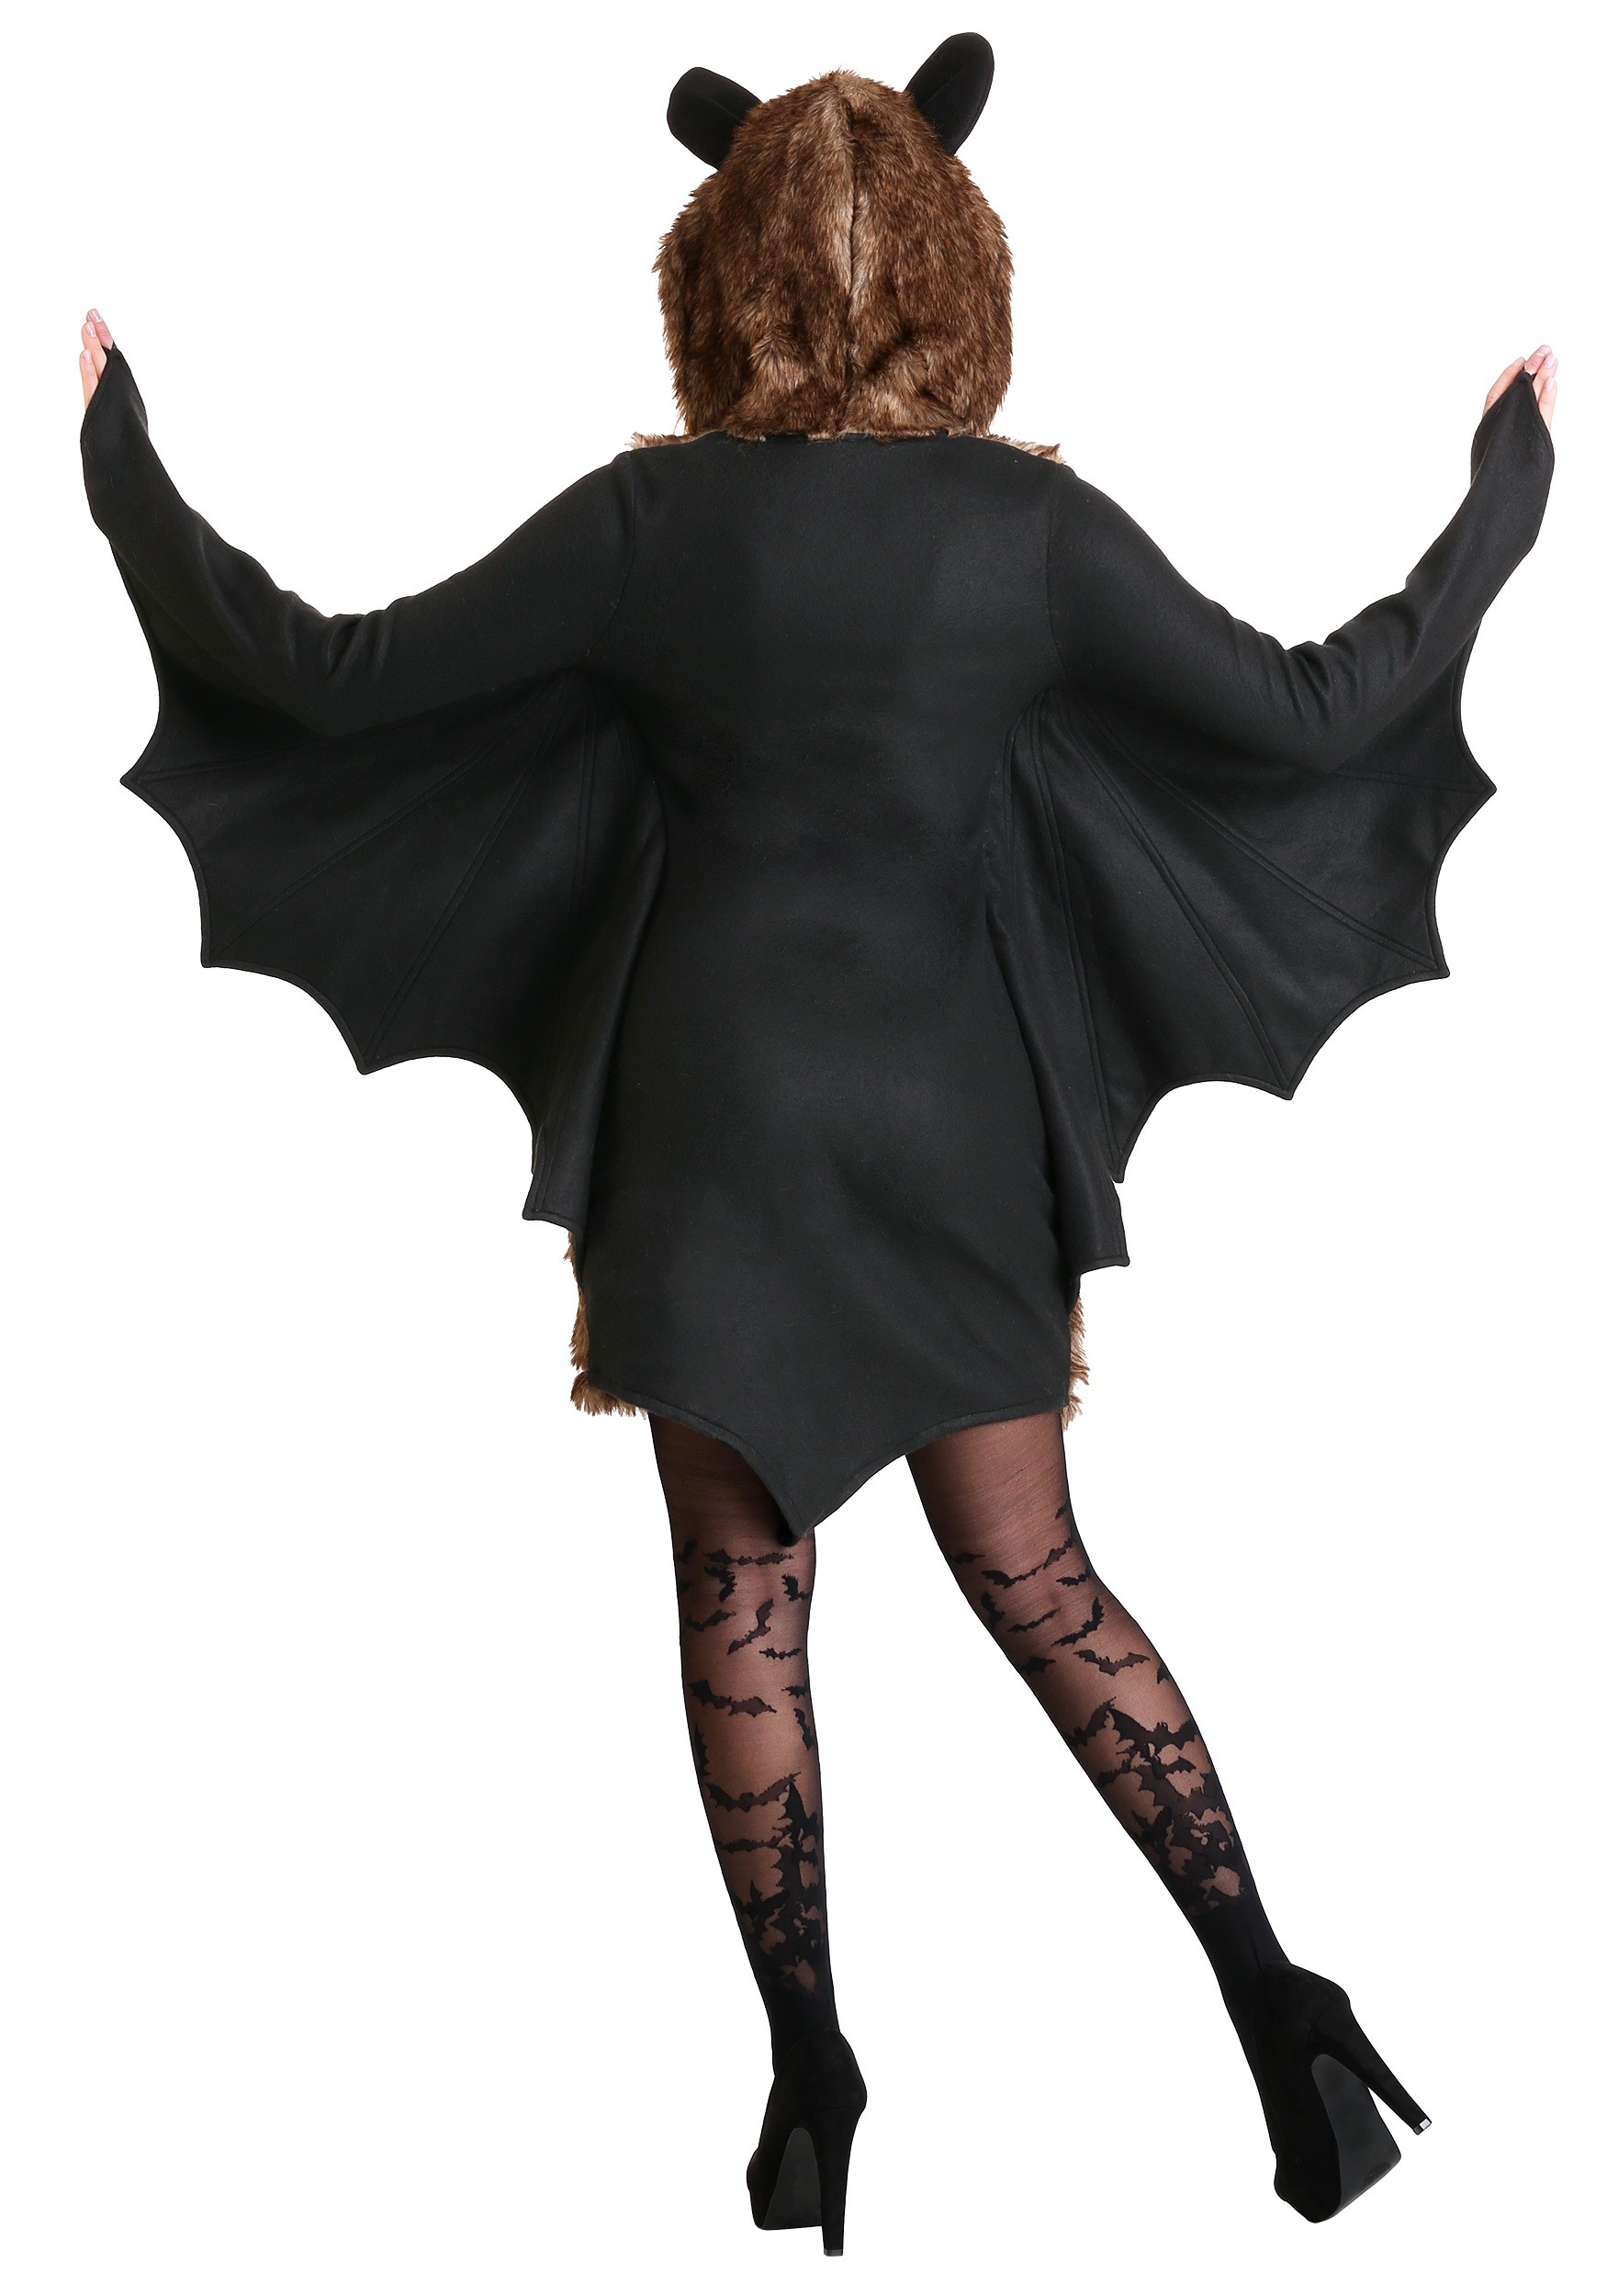 Deluxe Women's Bat Costume , Adult Animal Costumes